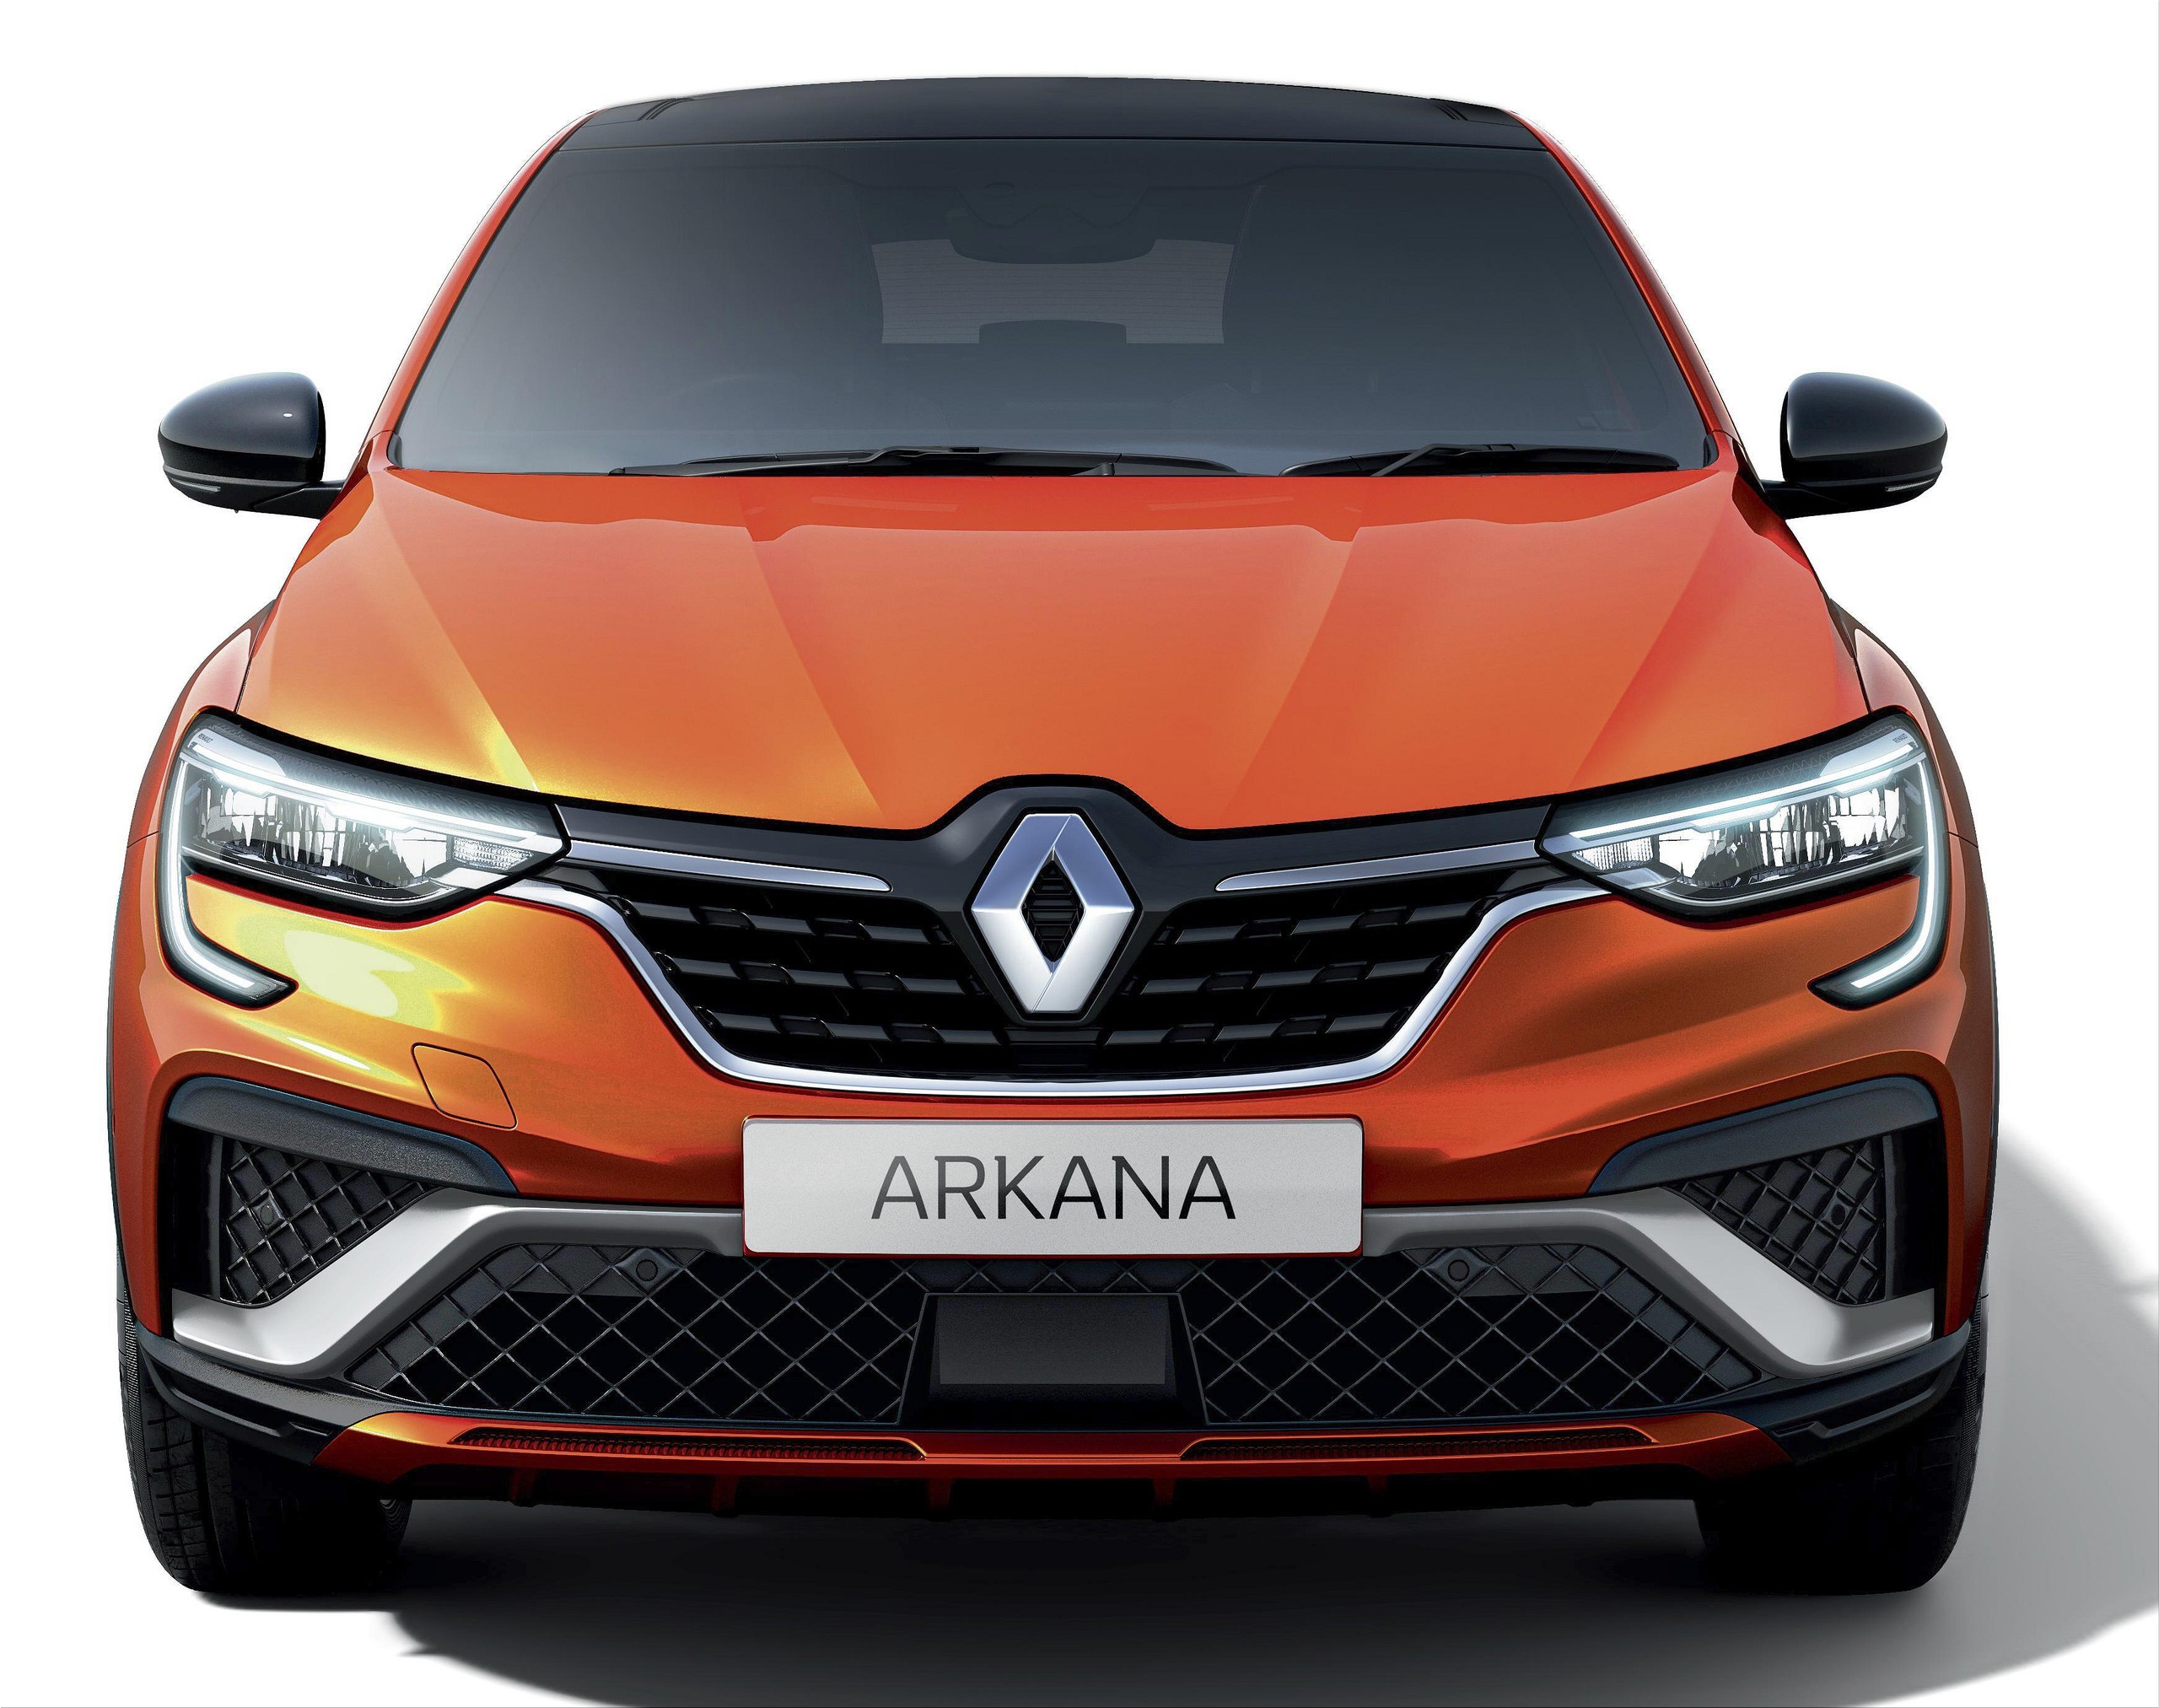 The Renault Arkana is entering SUV market